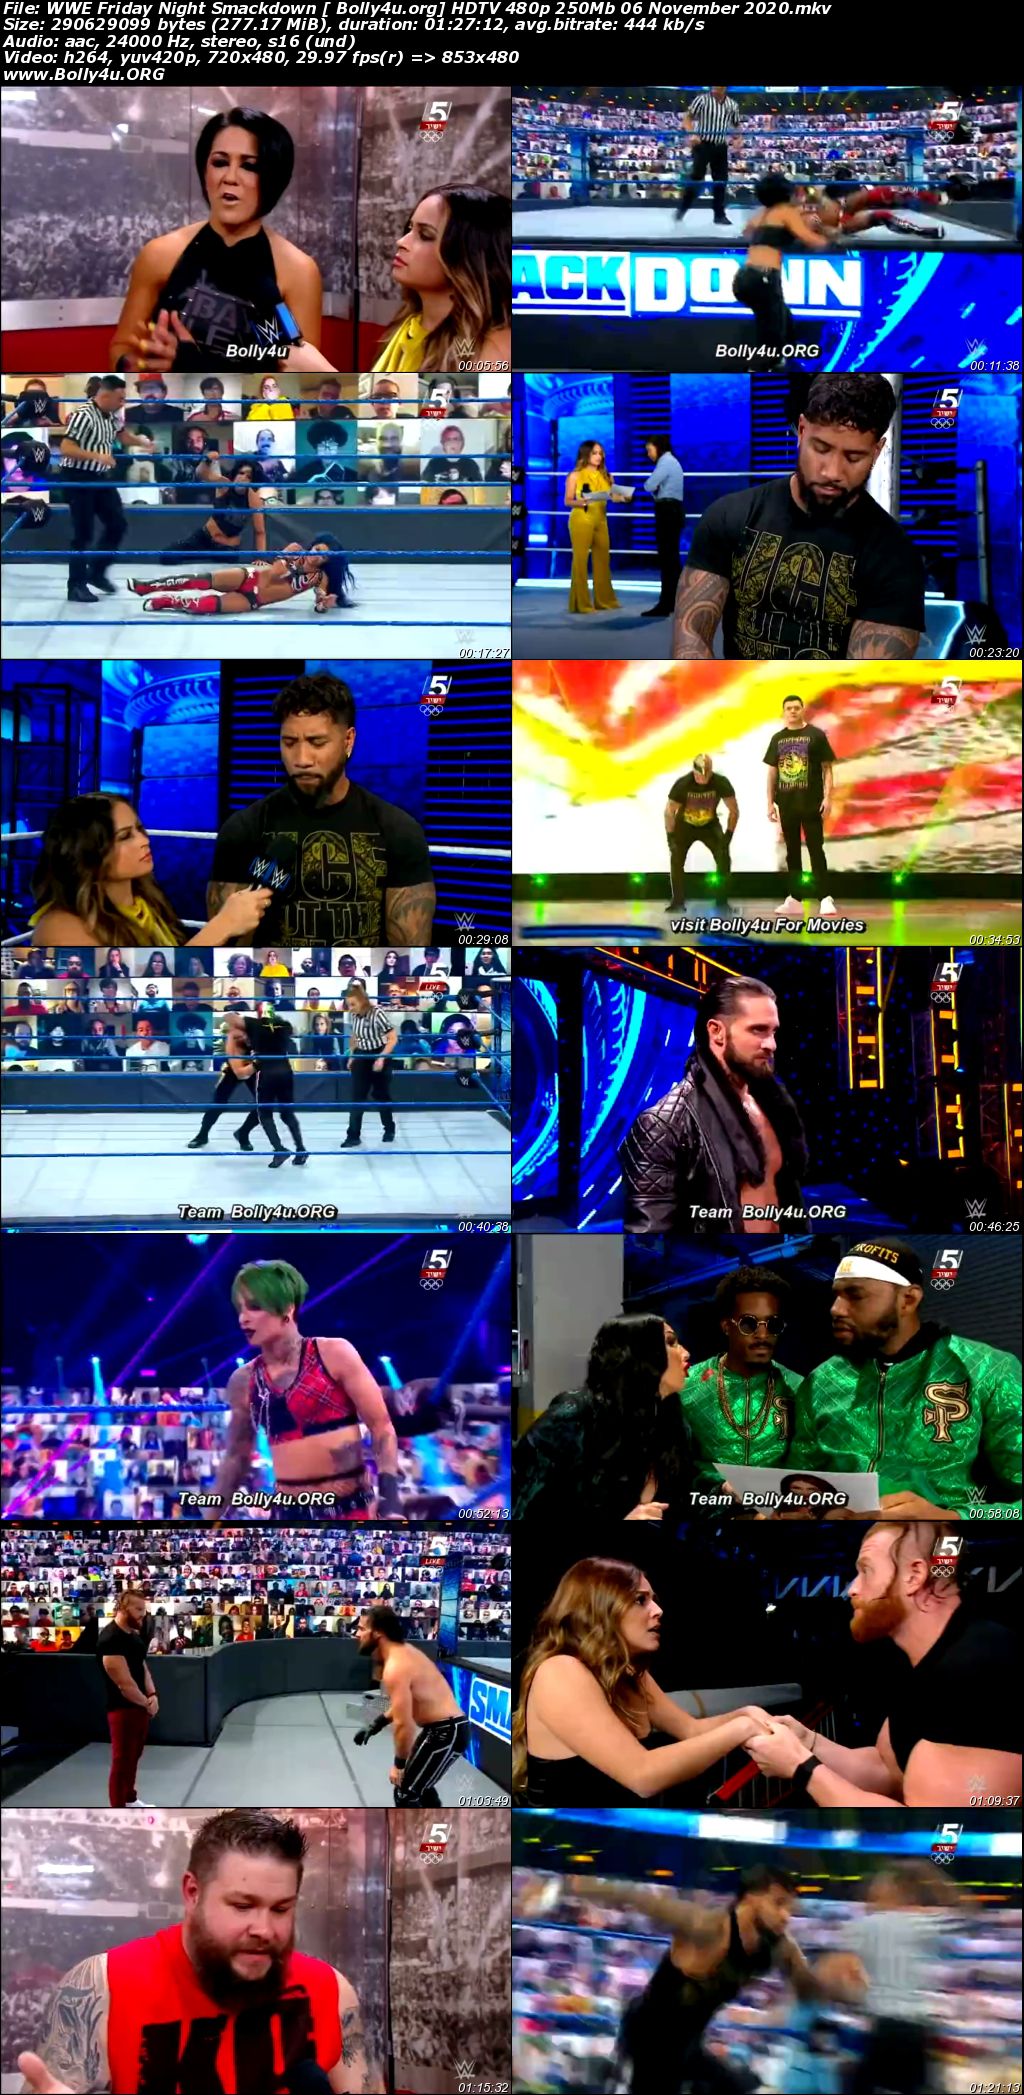 WWE Friday Night Smackdown HDTV 480p 250Mb 06 November 2020 Download